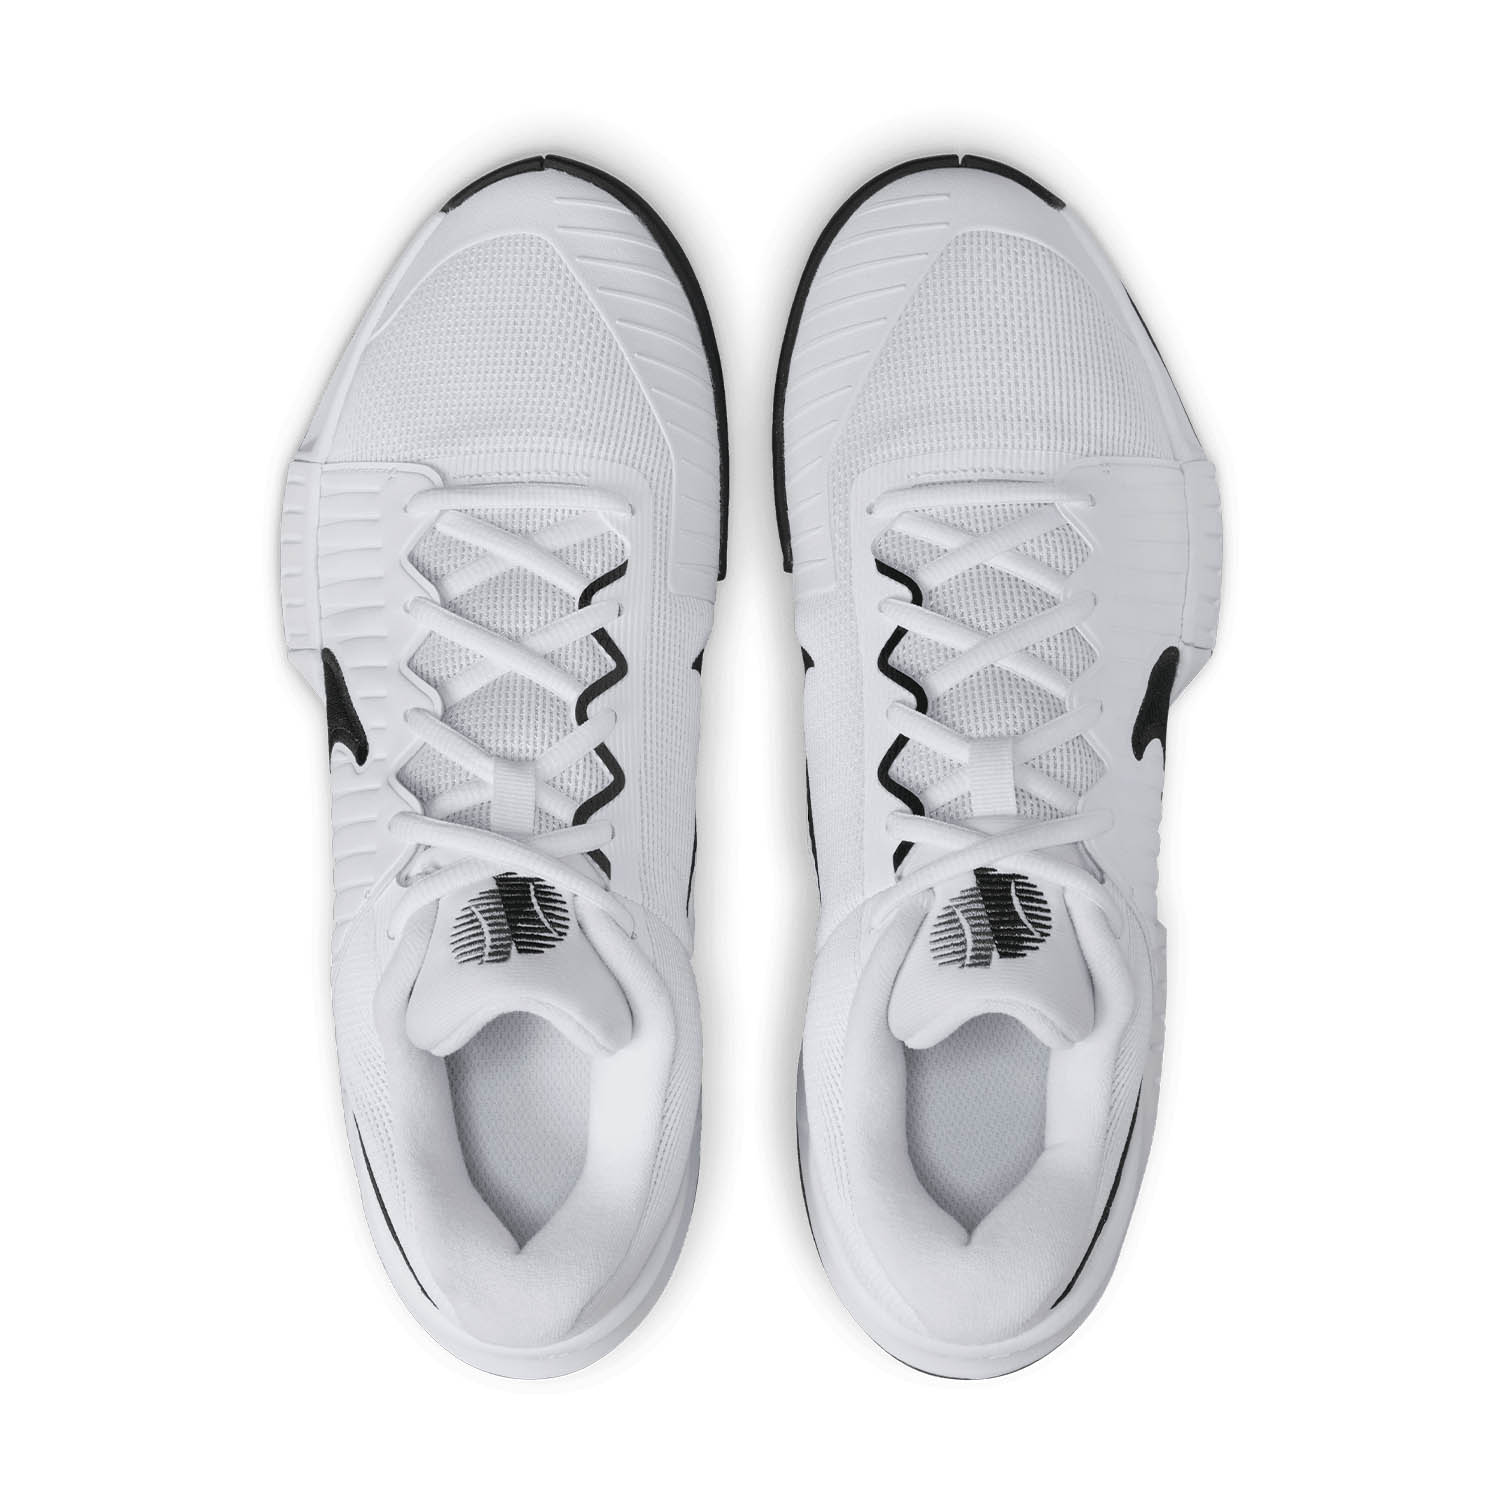 Nike Zoom GP Challenge Pro HC Men's Tennis Shoes - White/Black